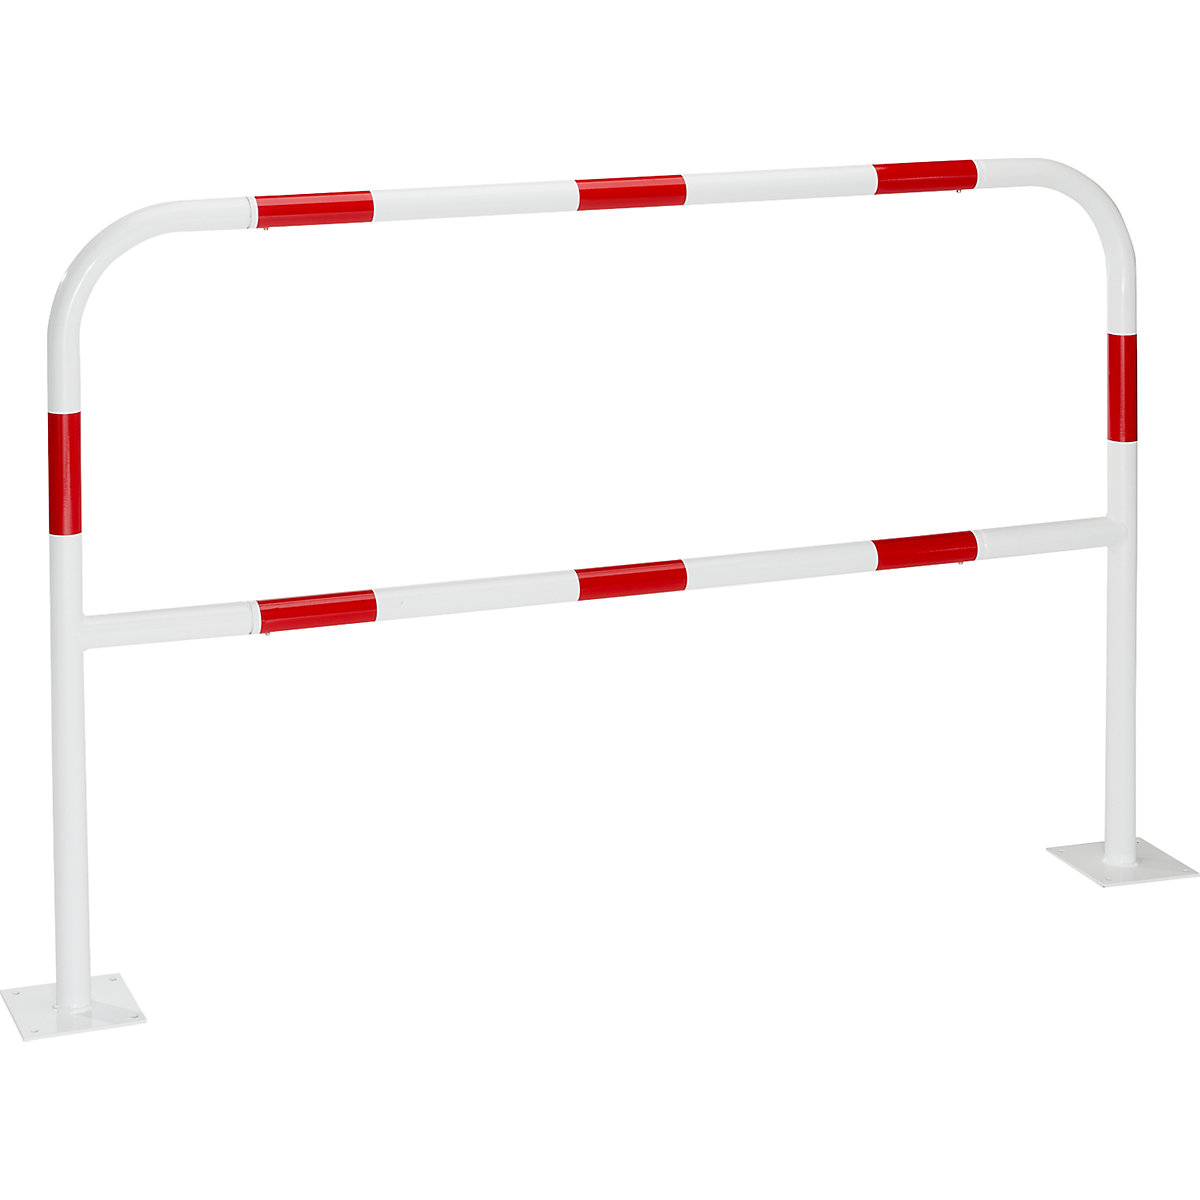 Arco de seguridad para zonas peligrosas, para atornillar, rojo / blanco, anchura 1500 mm-8